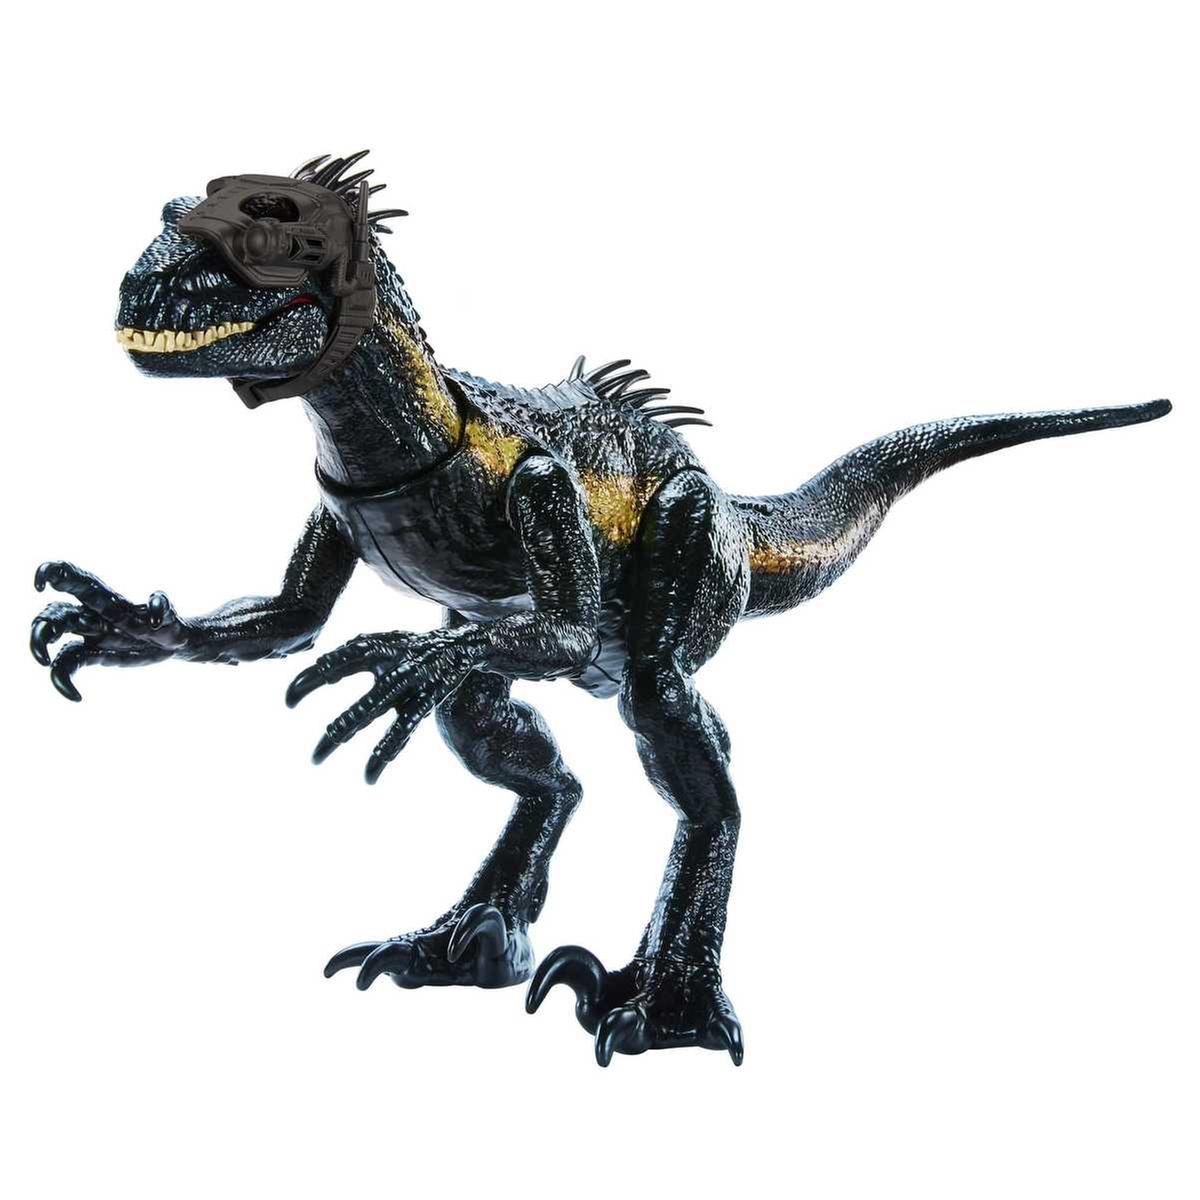 Jurassic World - Figura de dinosaurio Jurassic World Indoraptor con equipo  de ataque y seguimiento ㅤ, Jurassic World